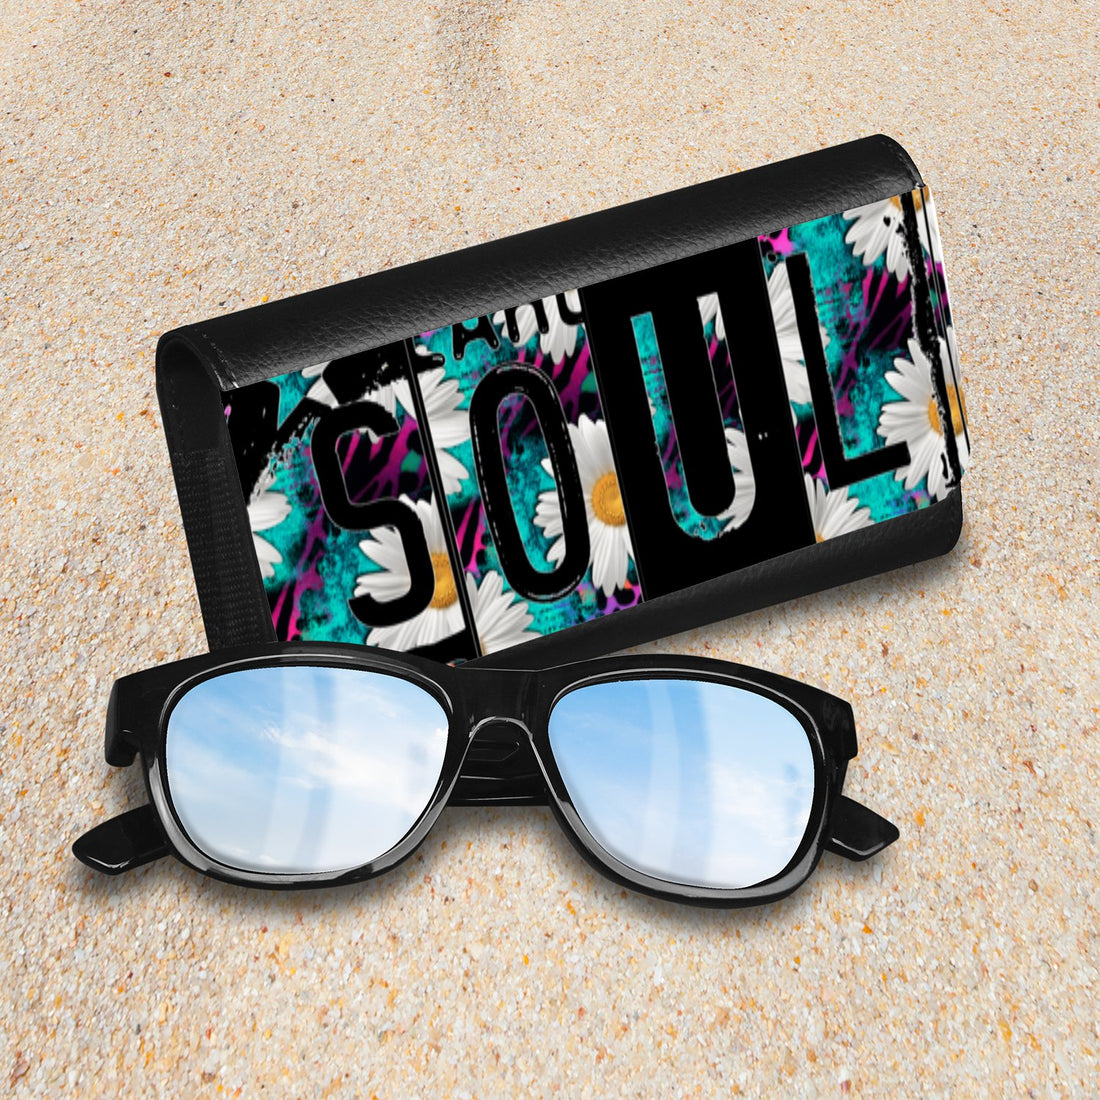 Soul Sunglasses Case - Positively Sassy - Soul Sunglasses Case